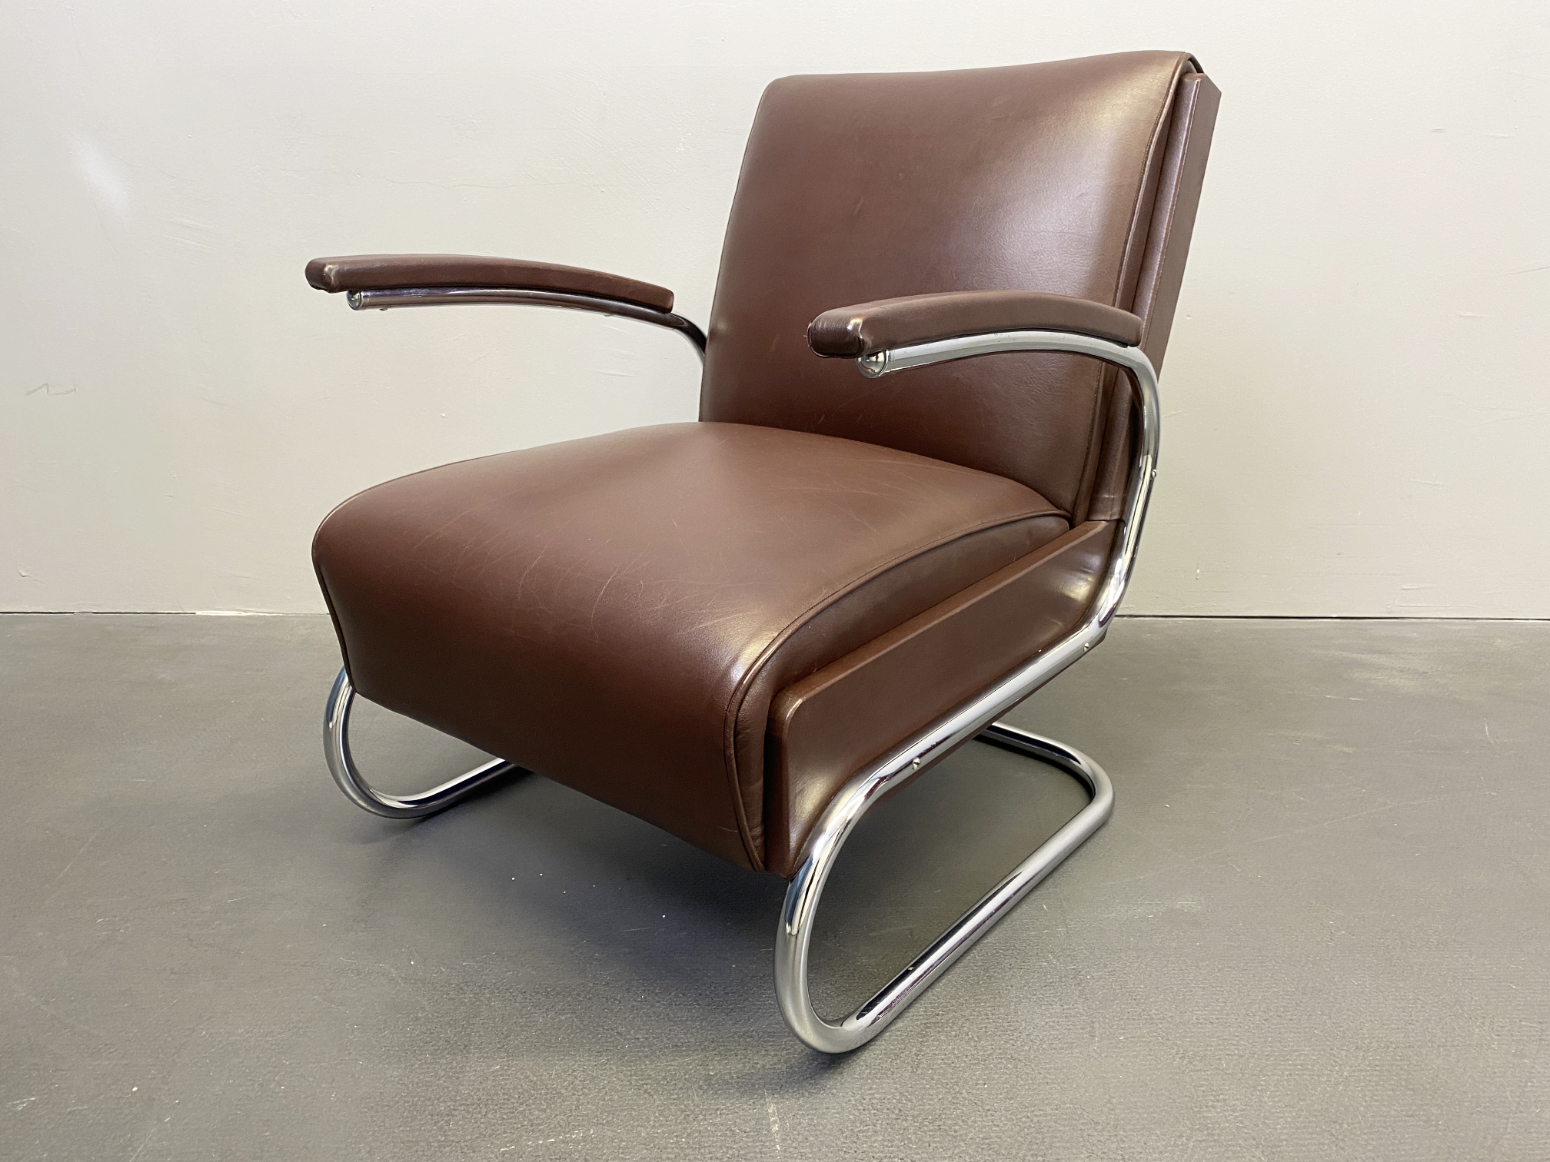 Armchair / Easychair / Cantilever tubular steel brown leather from Mücke Melder, 1930s.